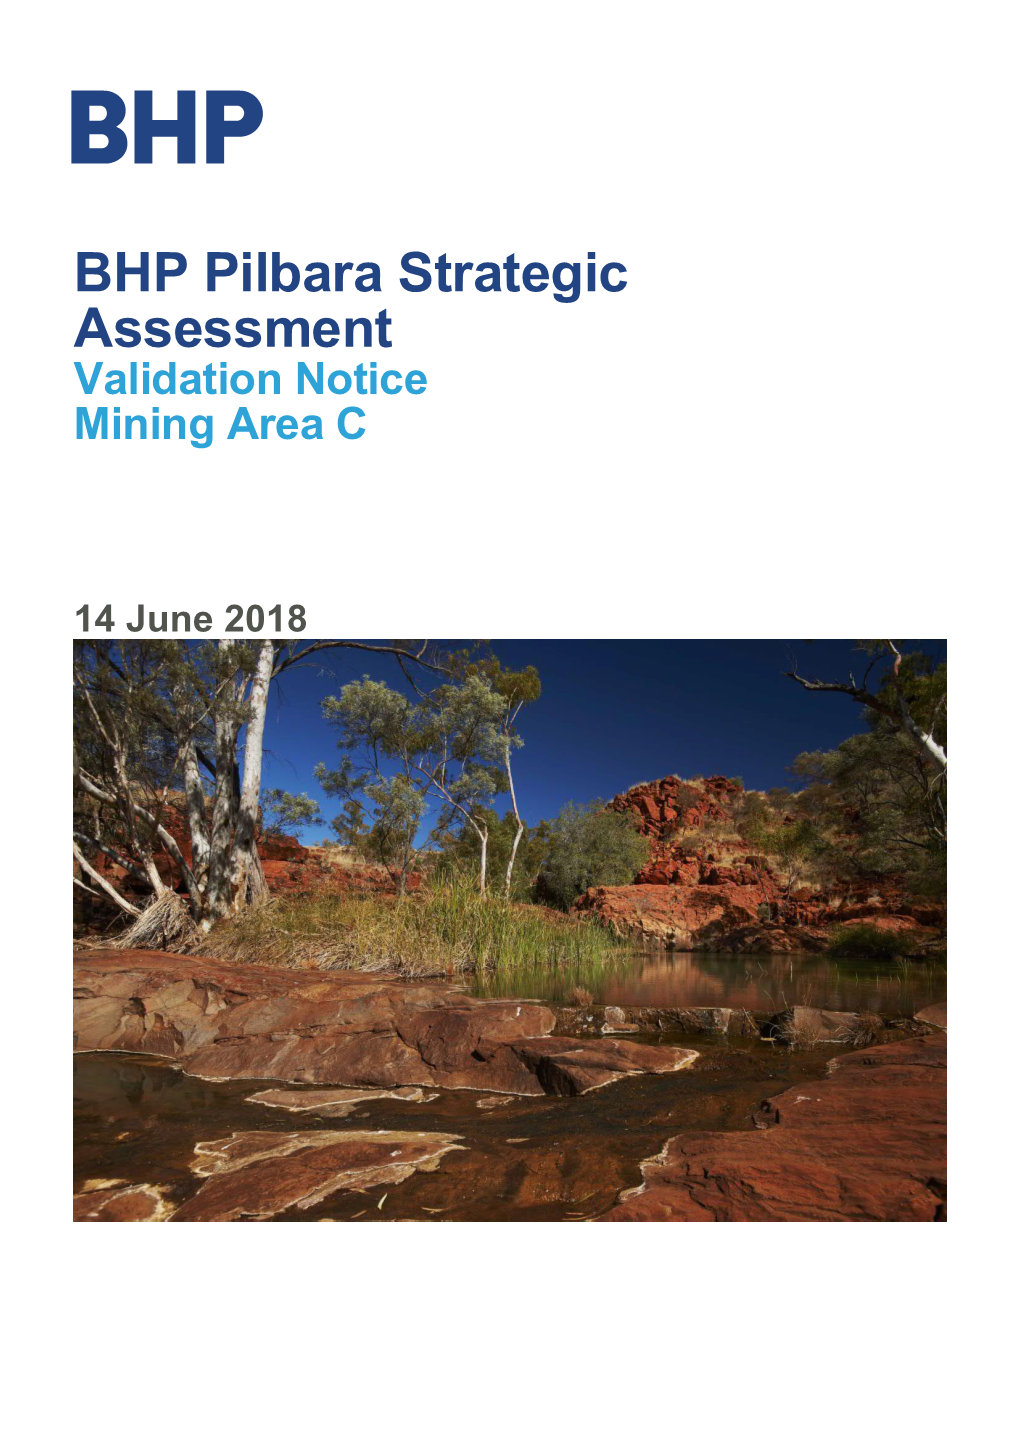 BHP Pilbara Strategic Assessment Validation Notice Mining Area C